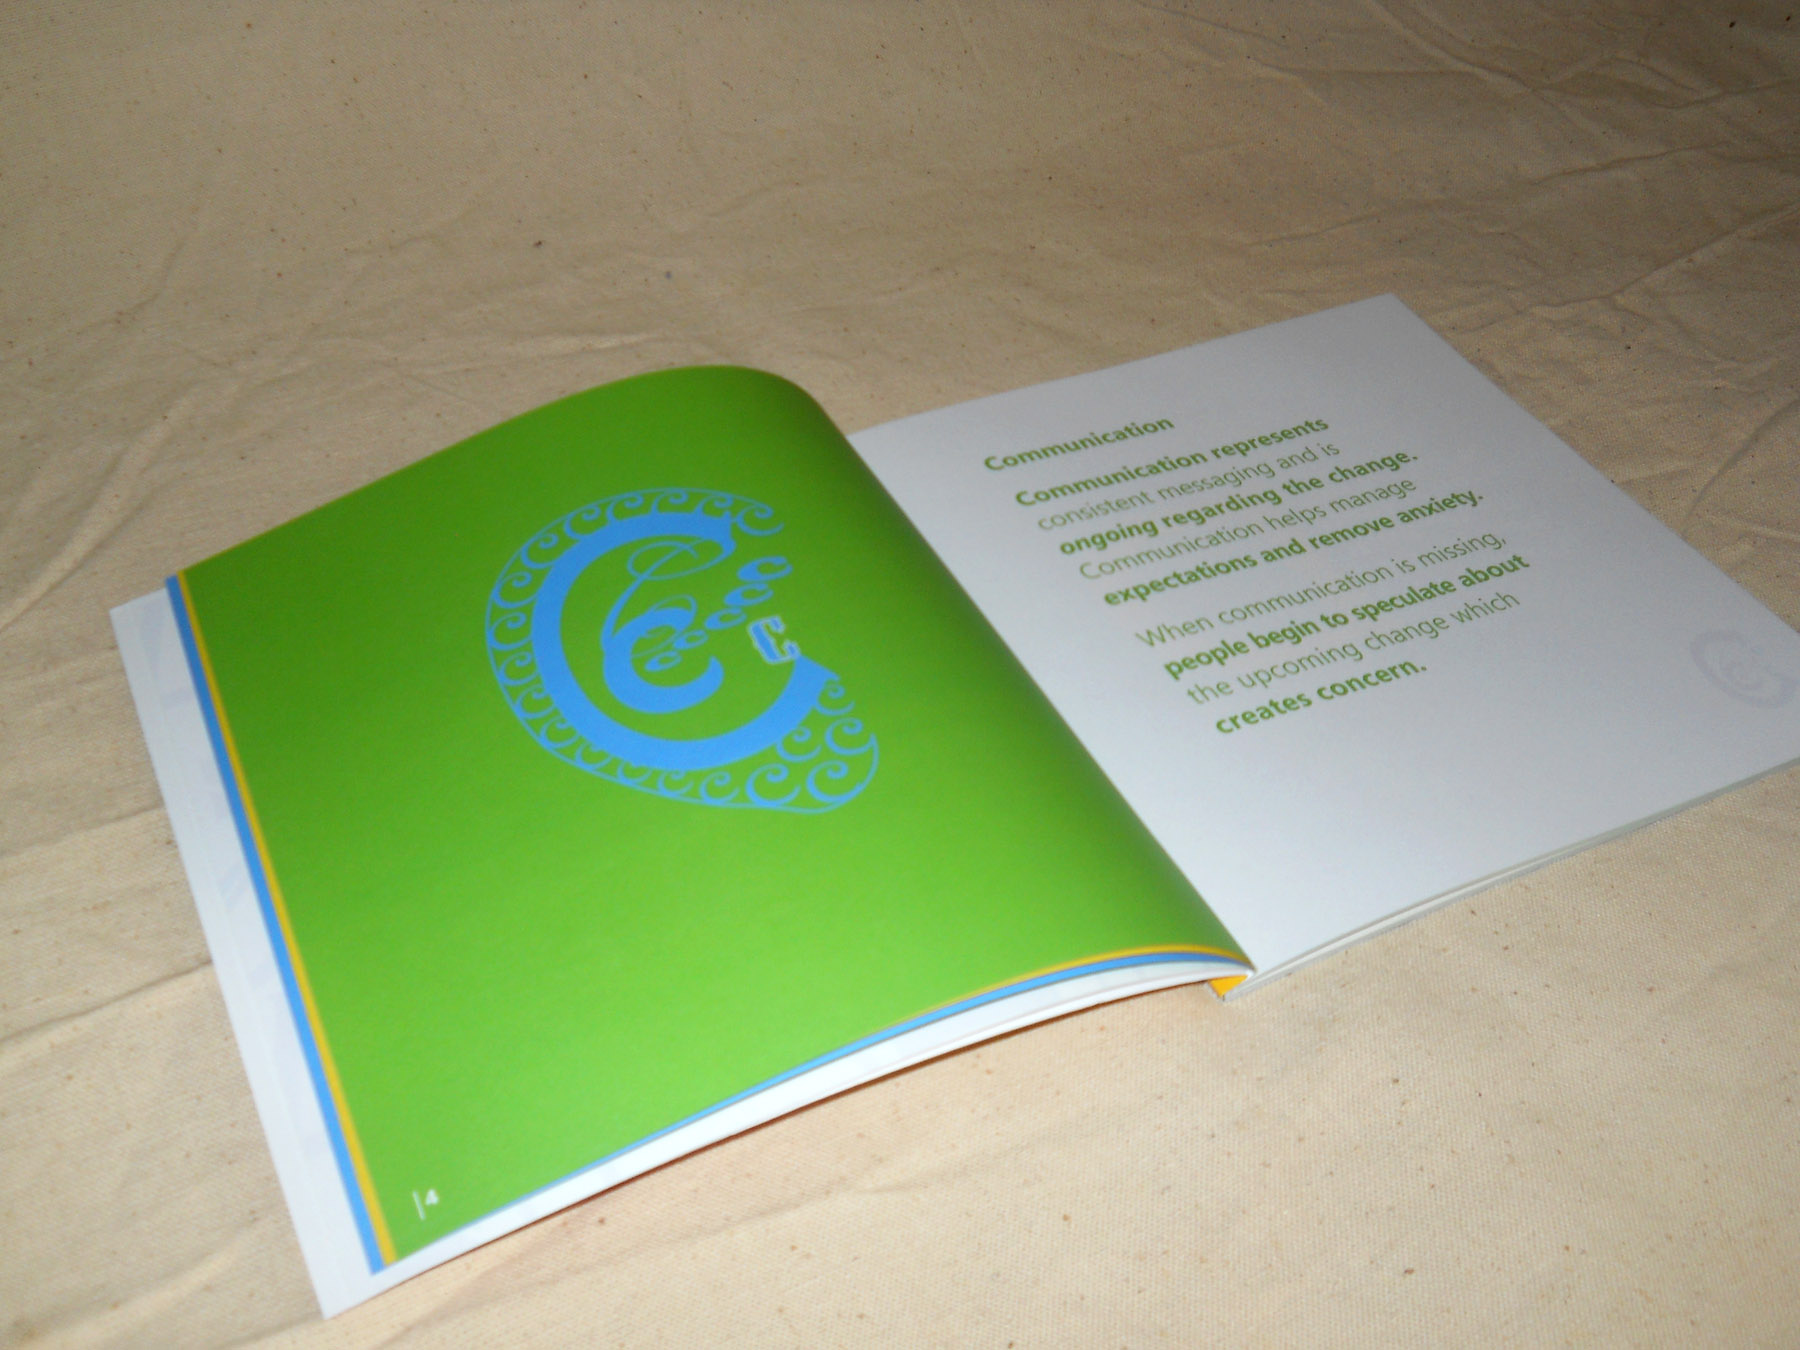 A Change Management Promotional booklet C photo